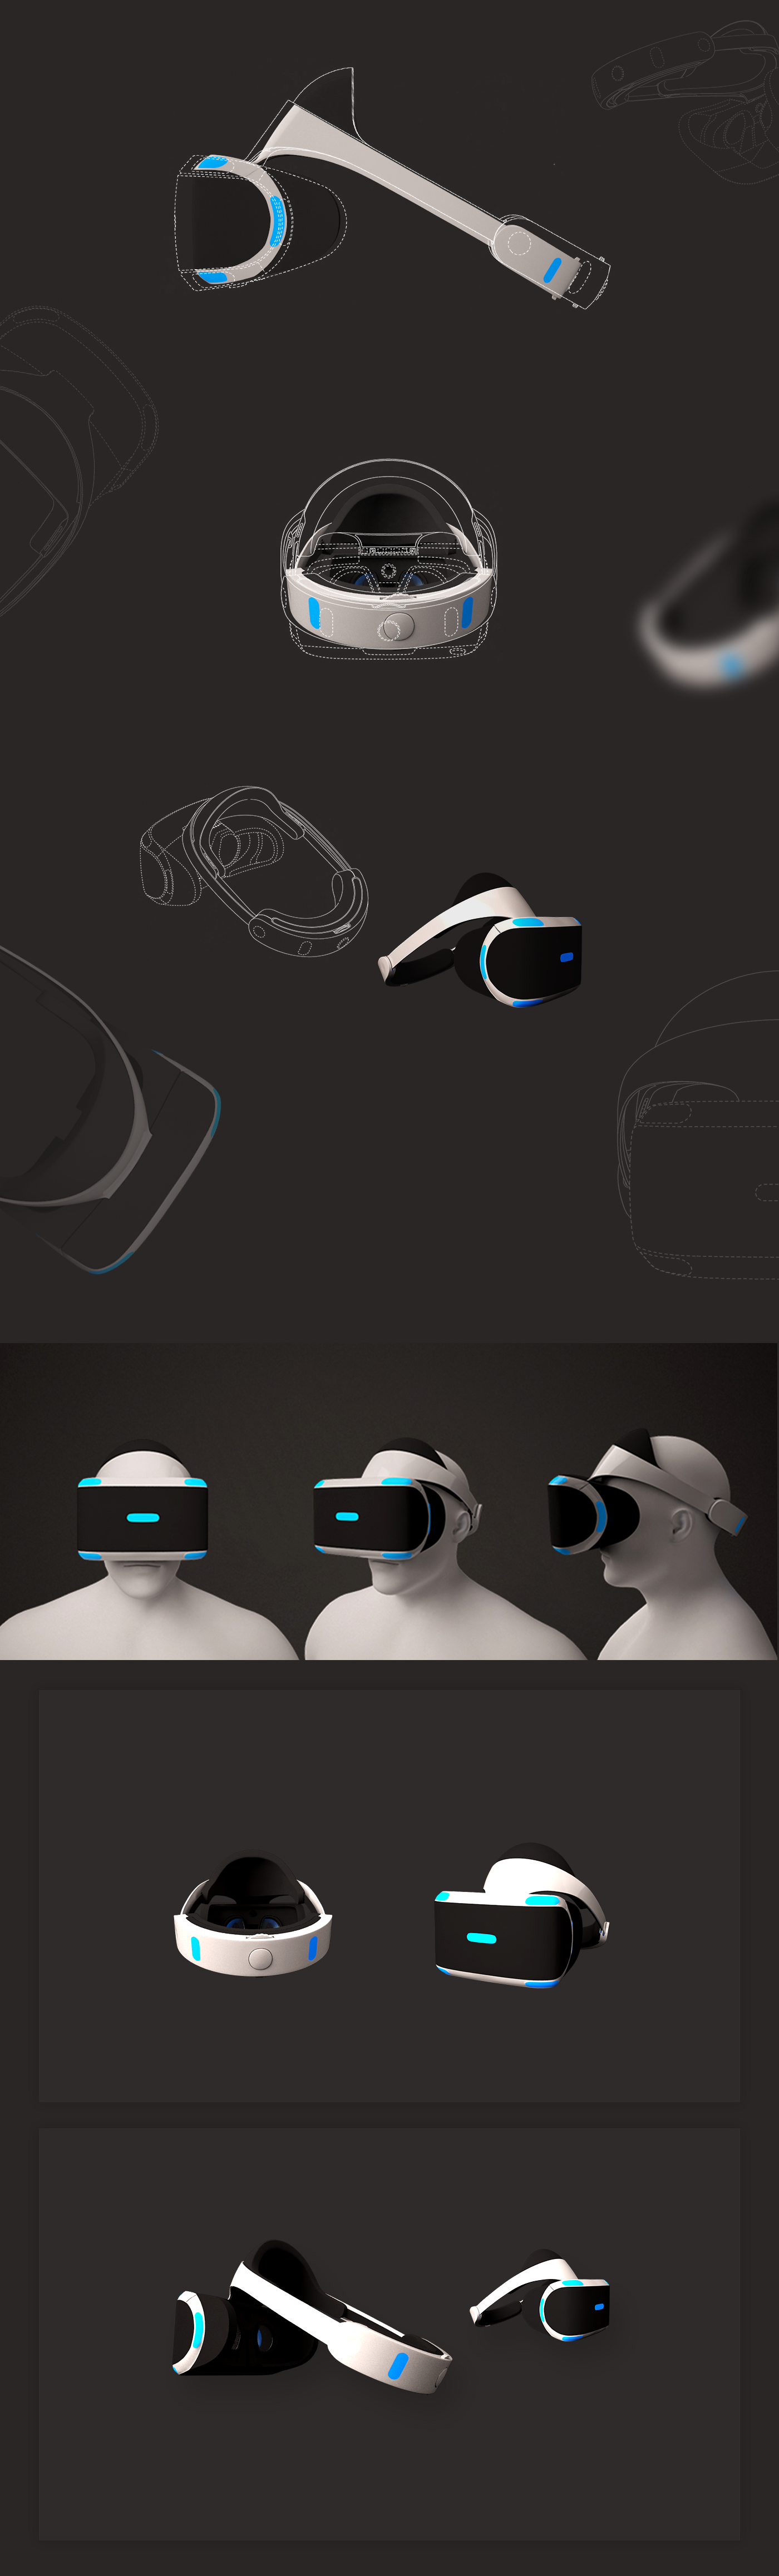 Playstation VR Sony tvc video Virtual reality